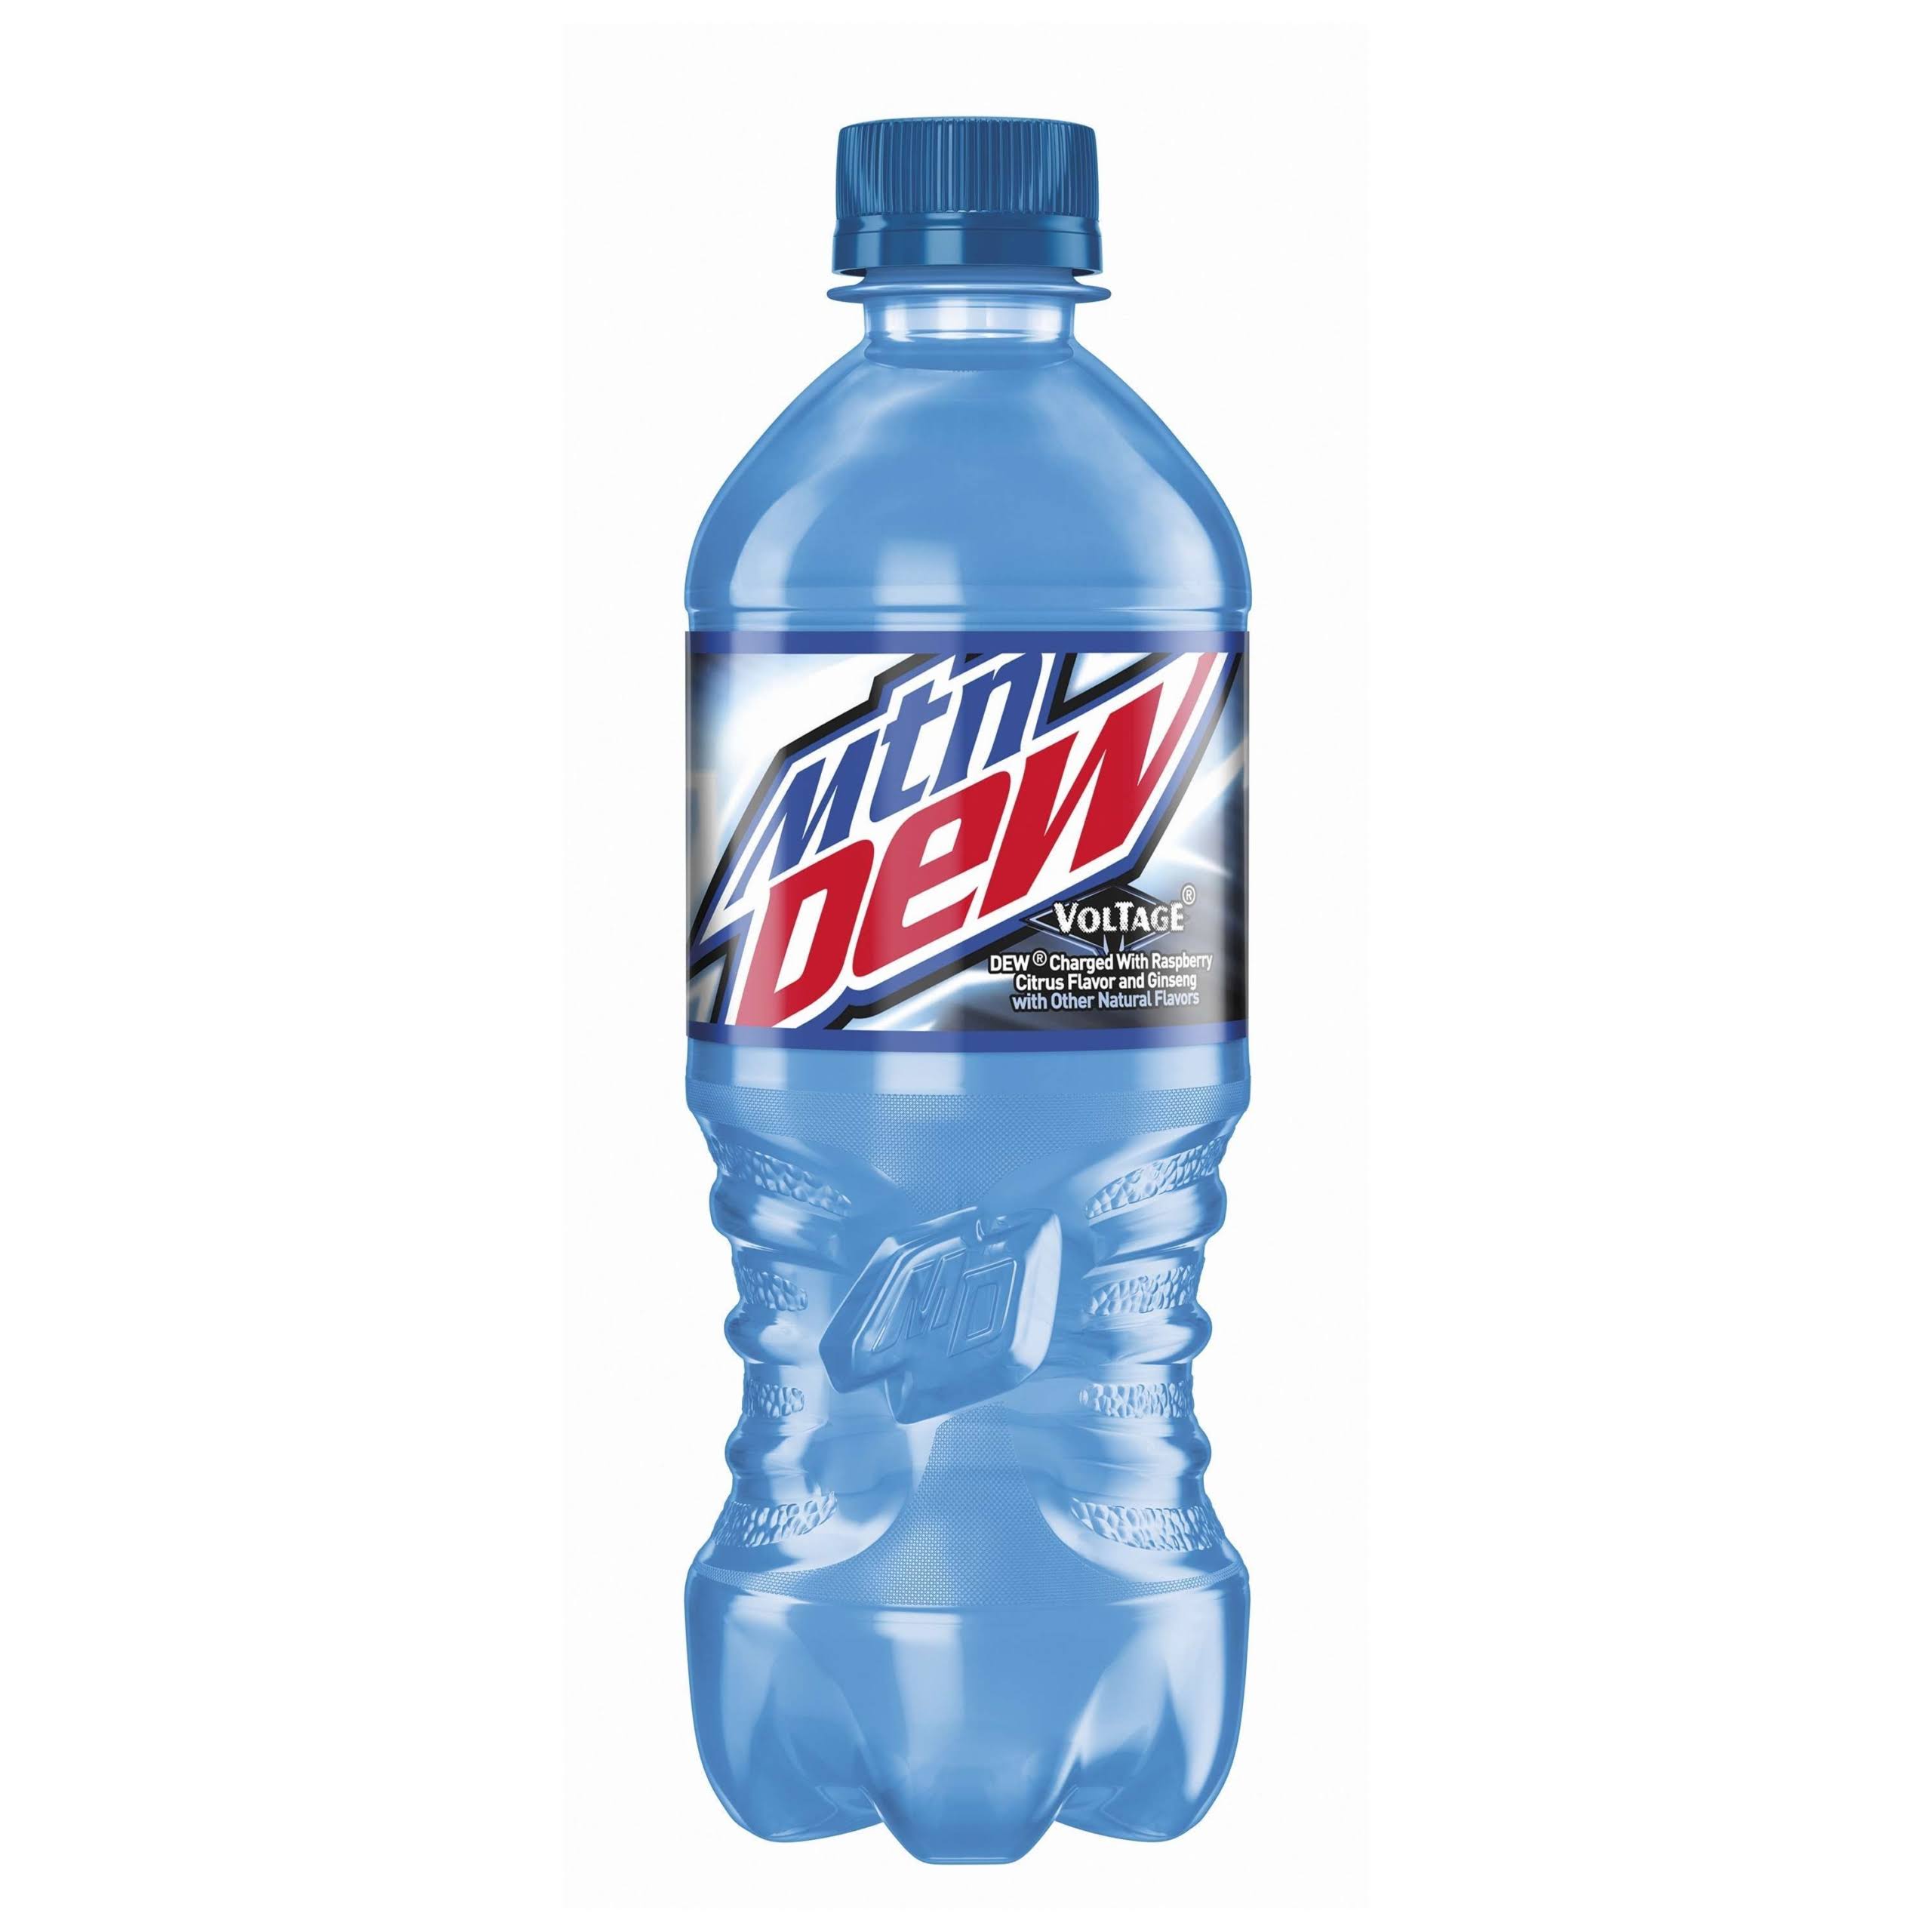 Mtn Dew Soda, Voltage - 20 fl oz